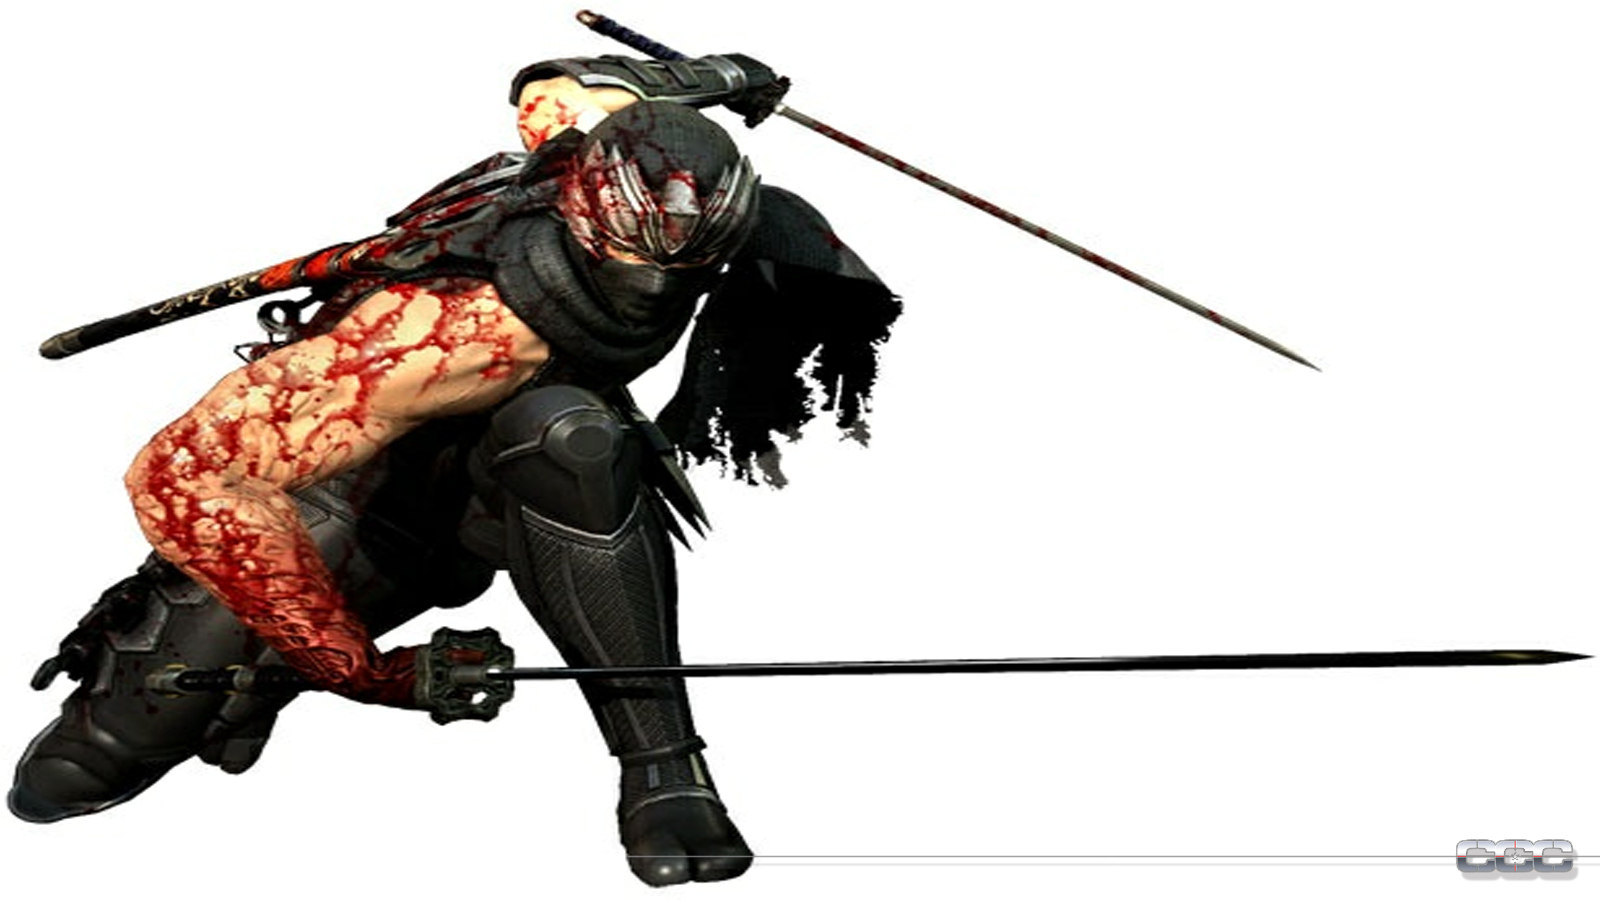 ... Ninja Gaiden 3: Razor's Edge Screenshot - click to enlarge